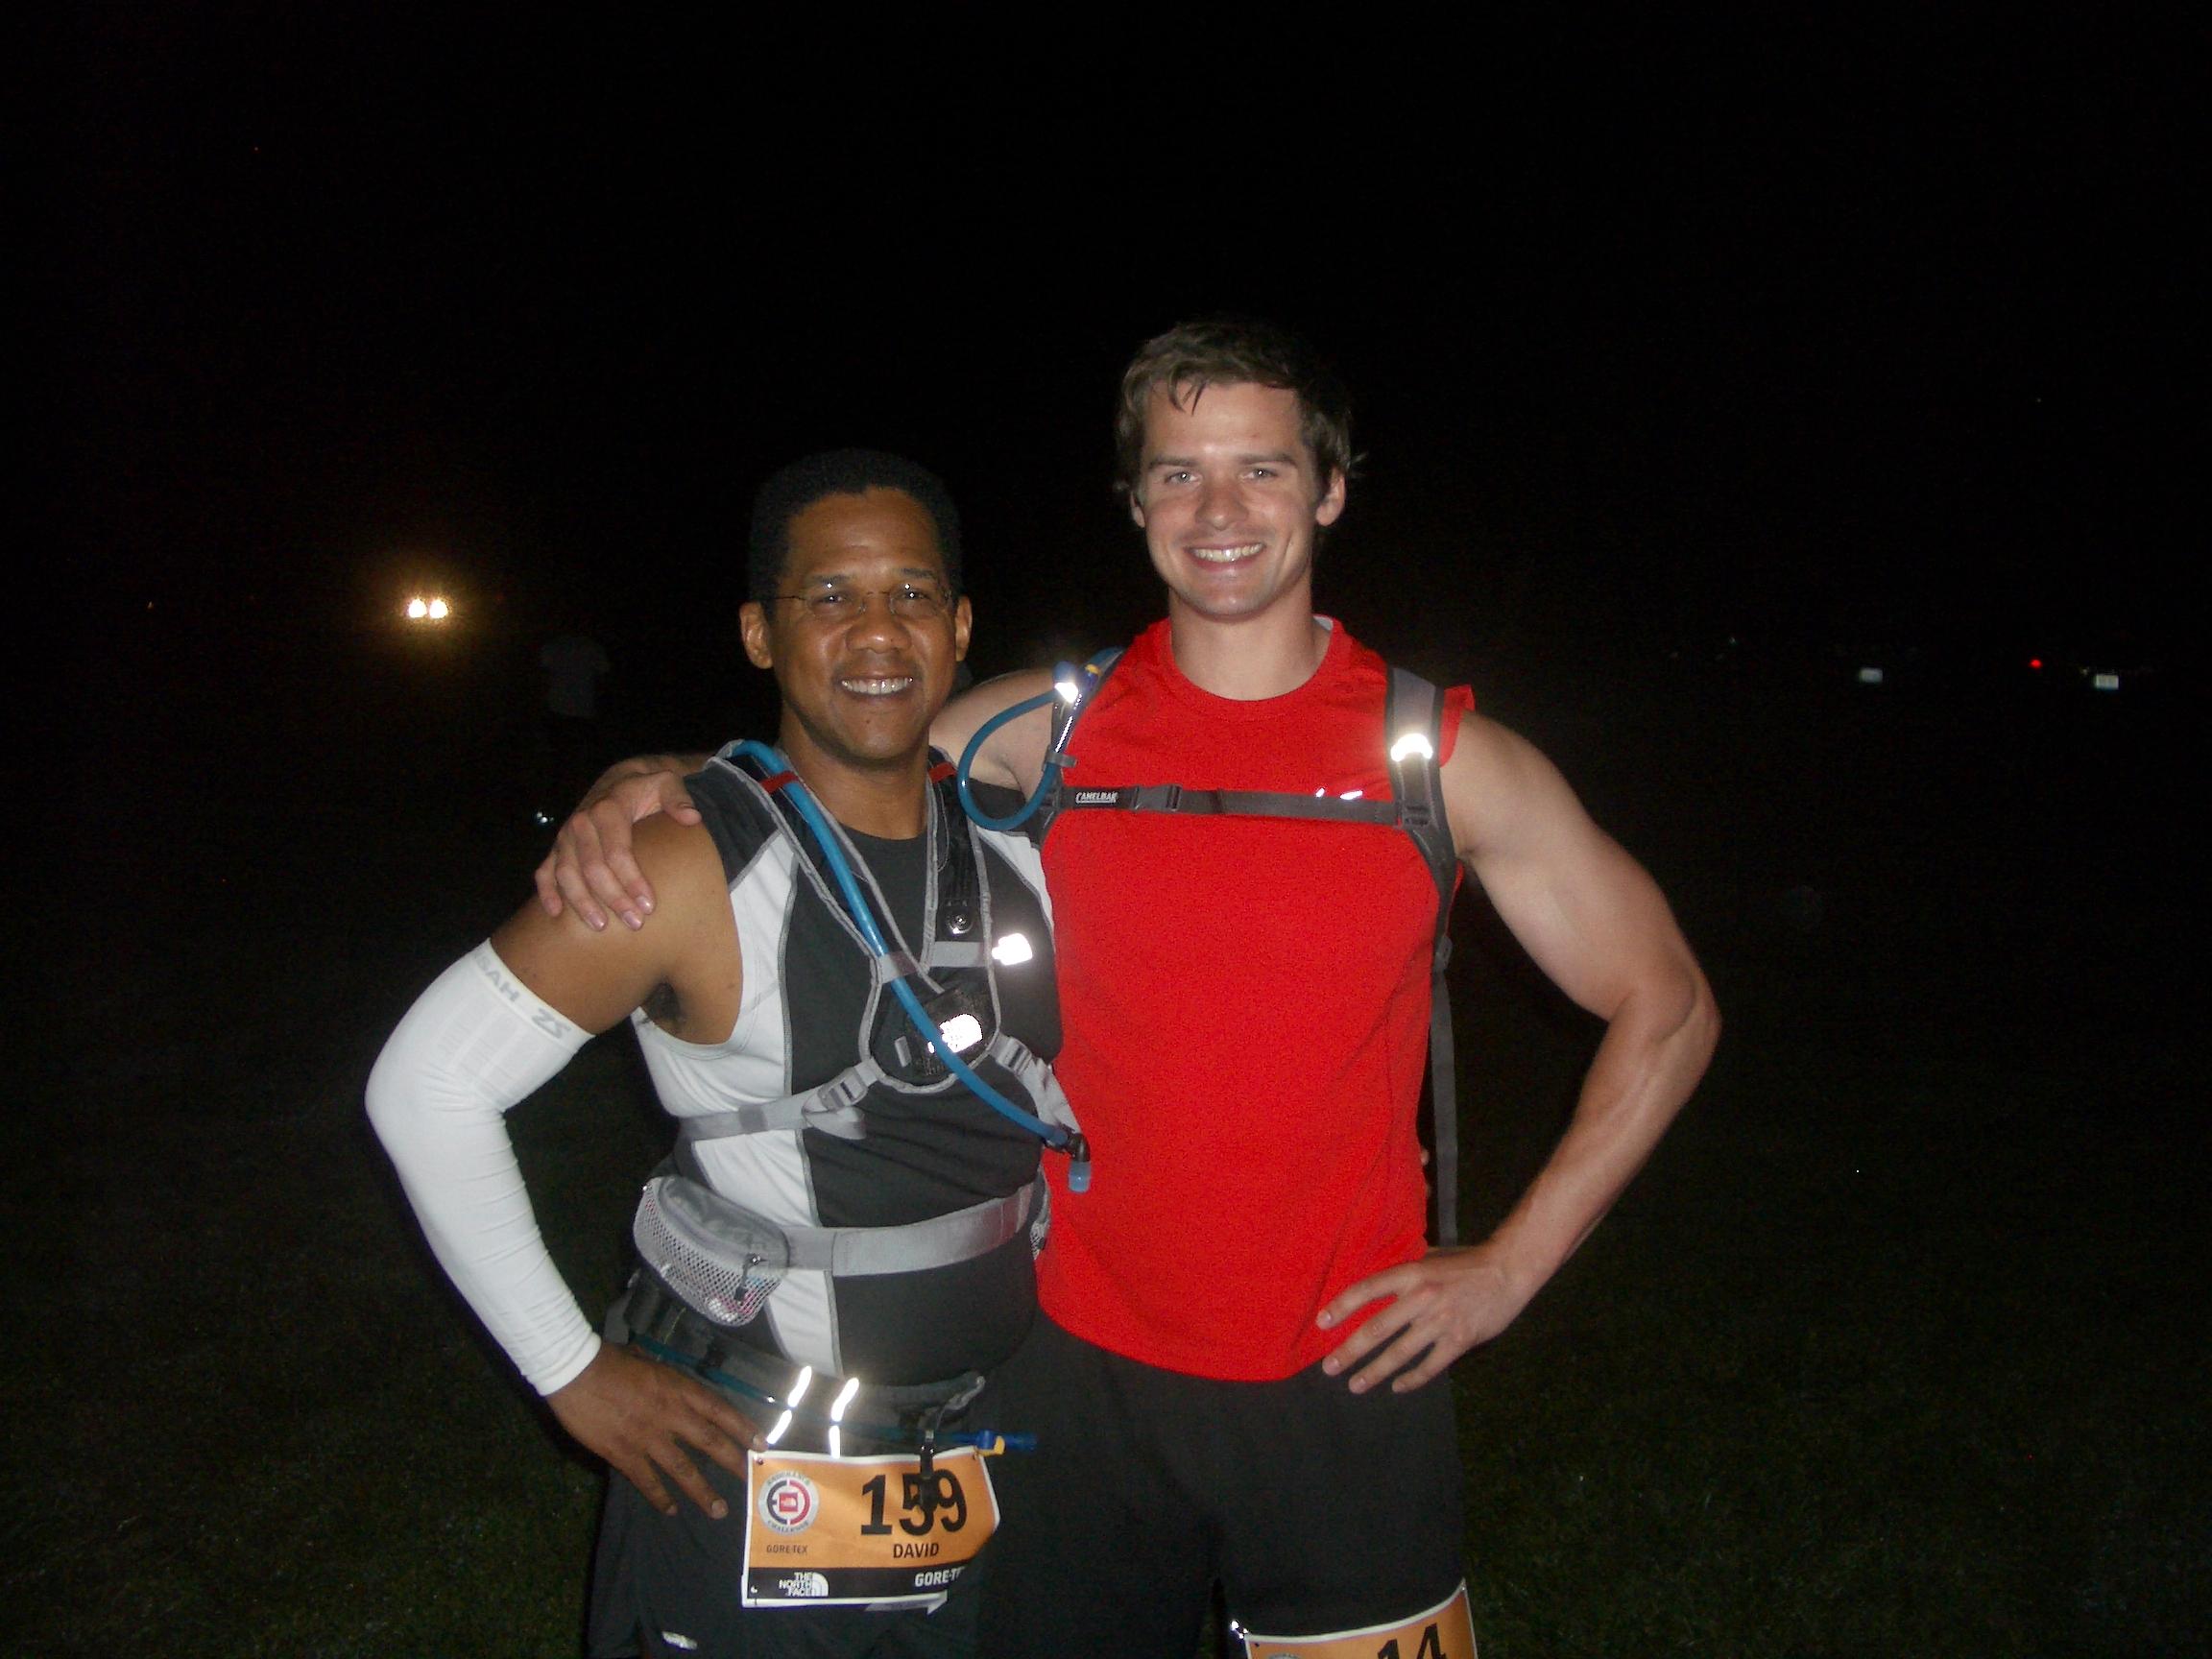 Joe & David before the north face endurance challenge 50 mile race in WA DC